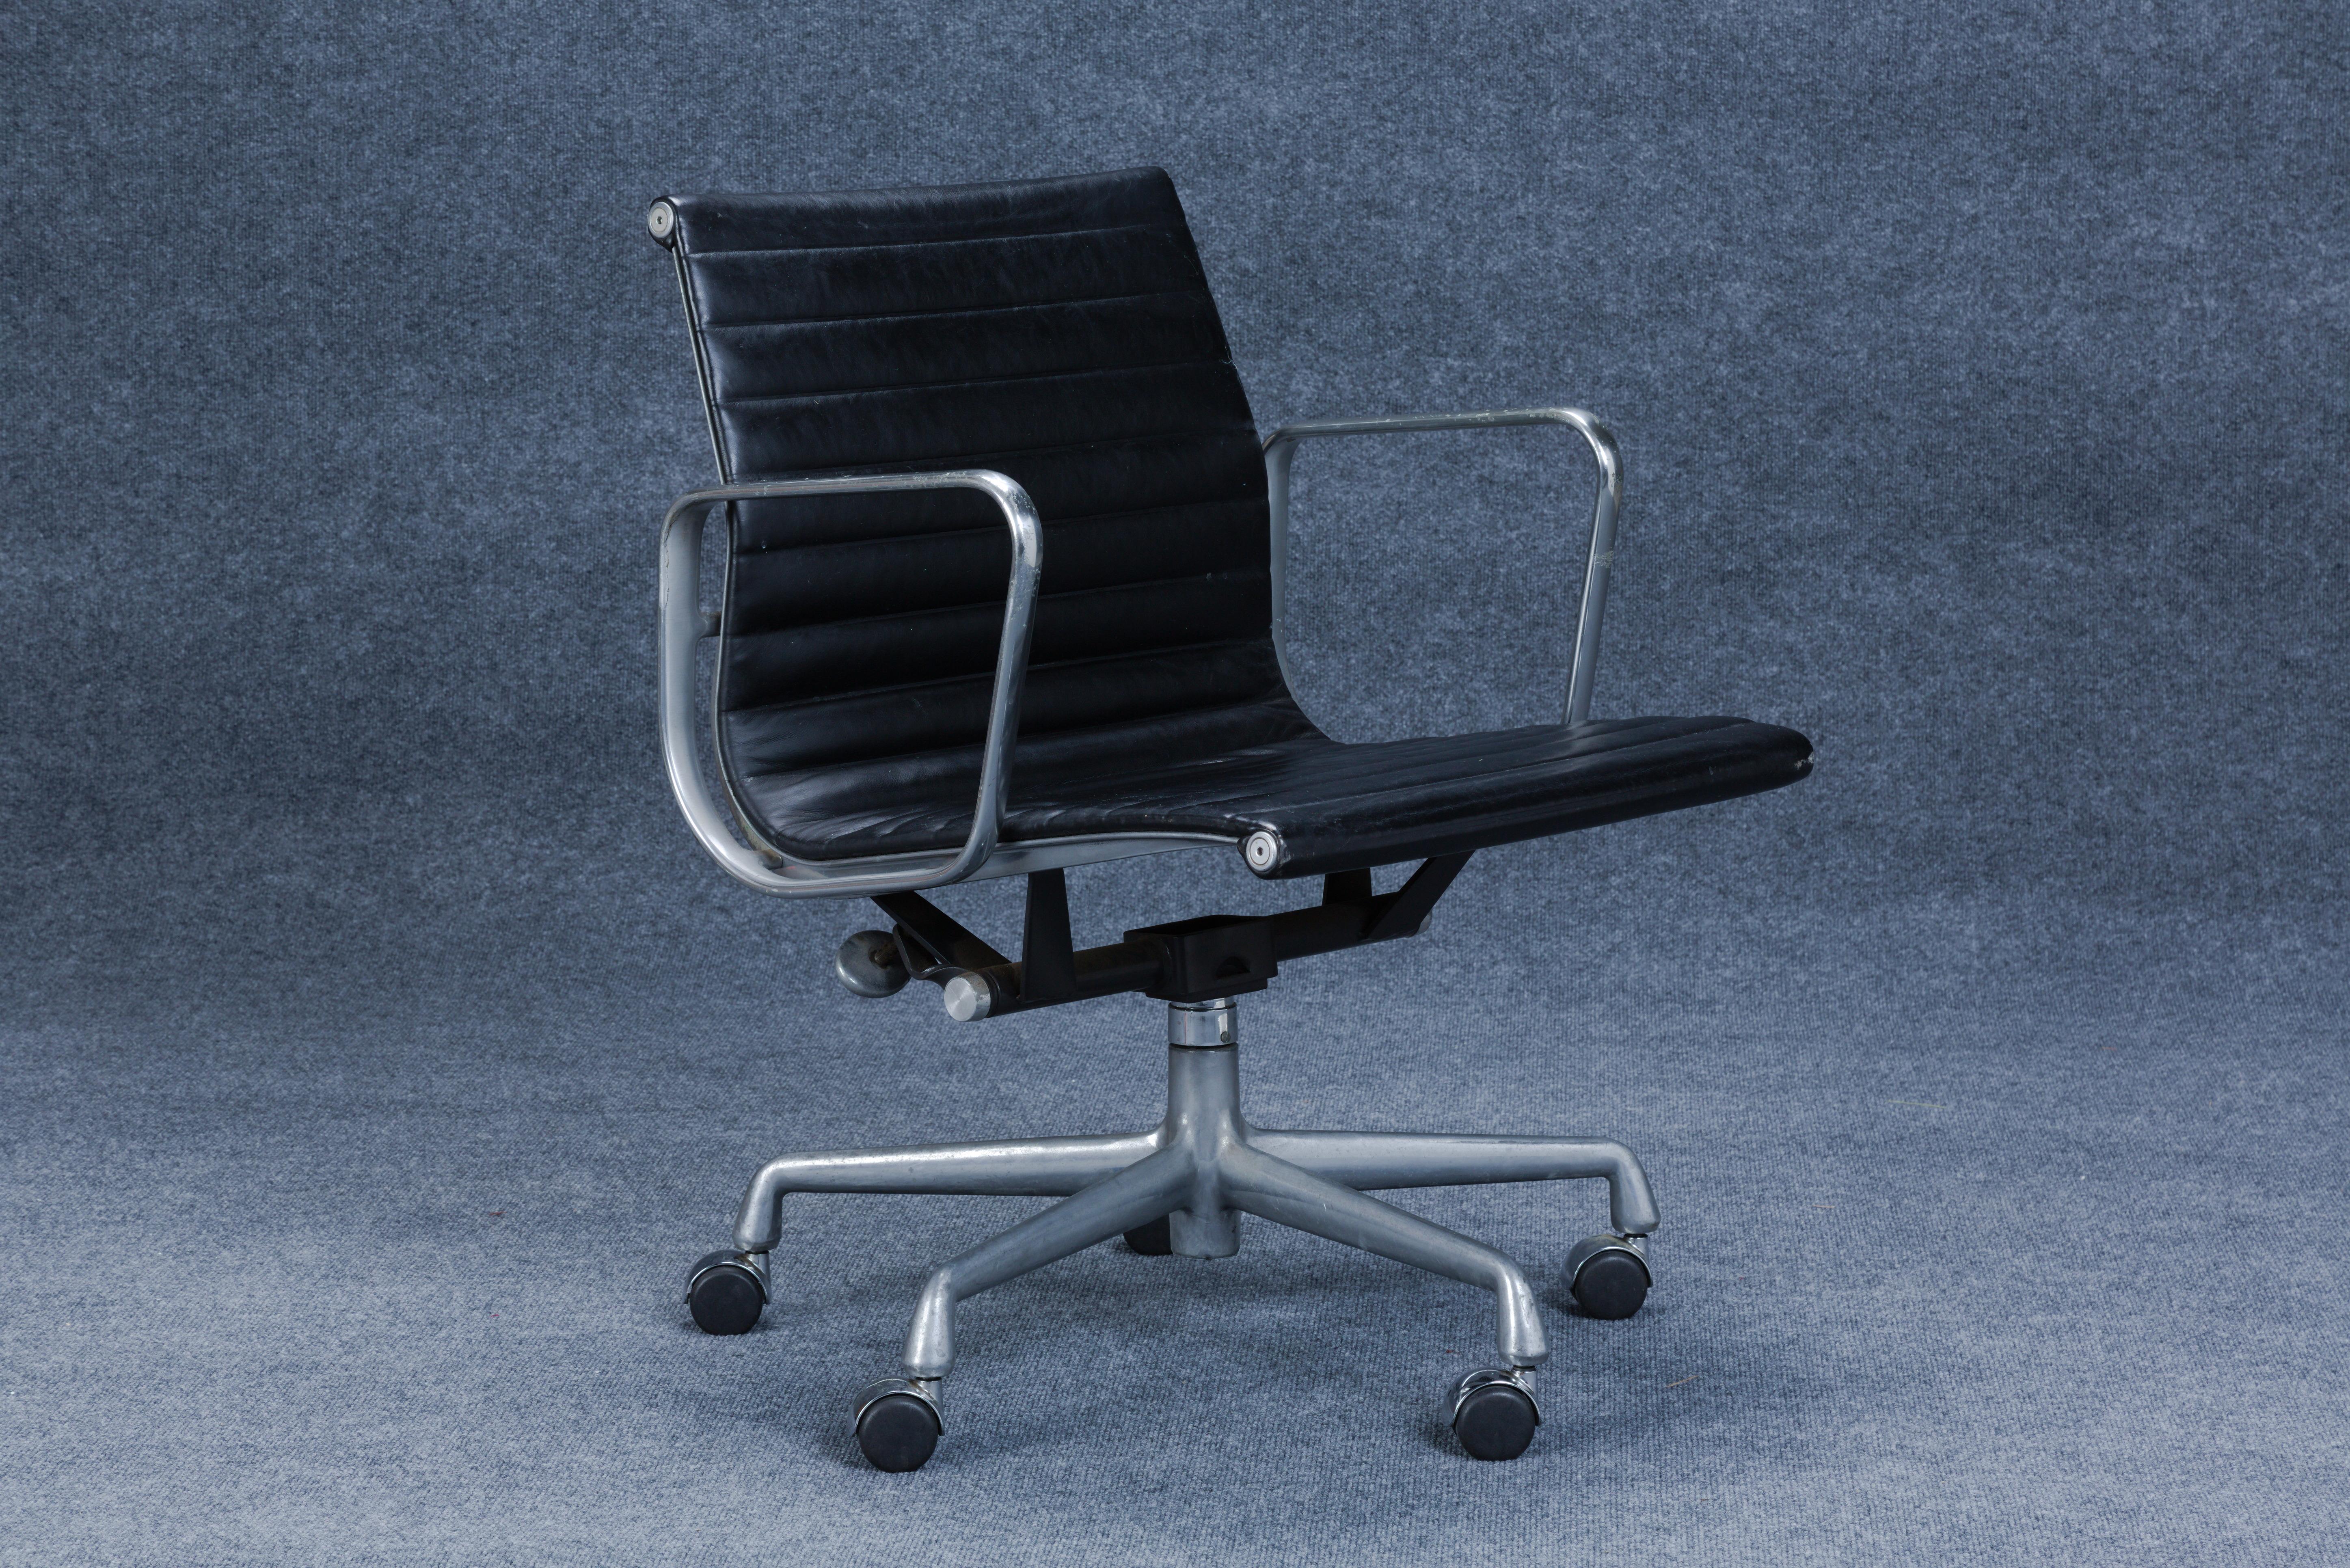 Eames Aluminum Group for Herman Miller Task Chair, Zeeland, Michigan, c. 1965, aluminum, leather, Herman Miller manufacturer's label, ht. 30, wd. 23, dp. 24 in. Seat height is adjustable between 17”-20”.

Bernice Alexandra 